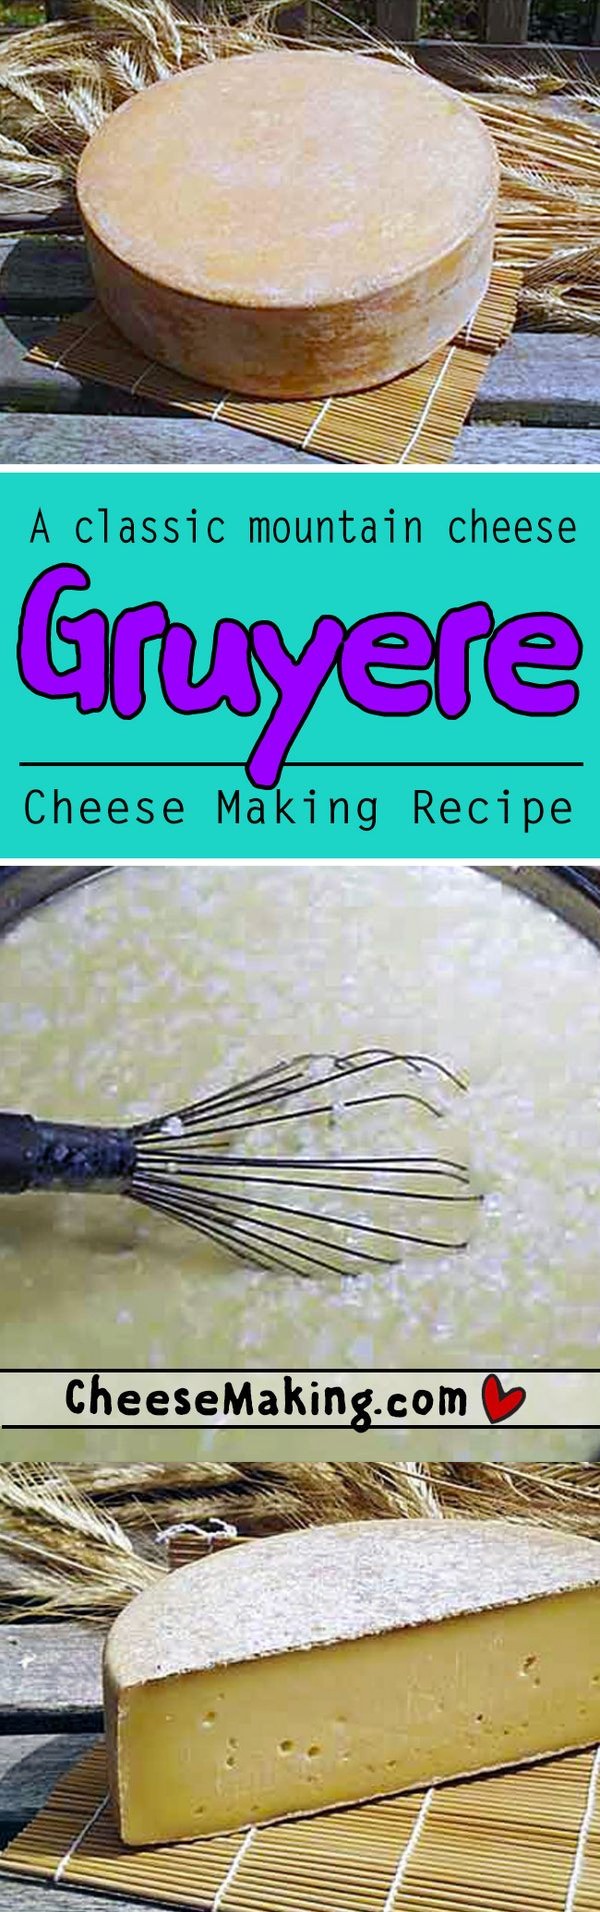 How to Make Gruyere Cheese